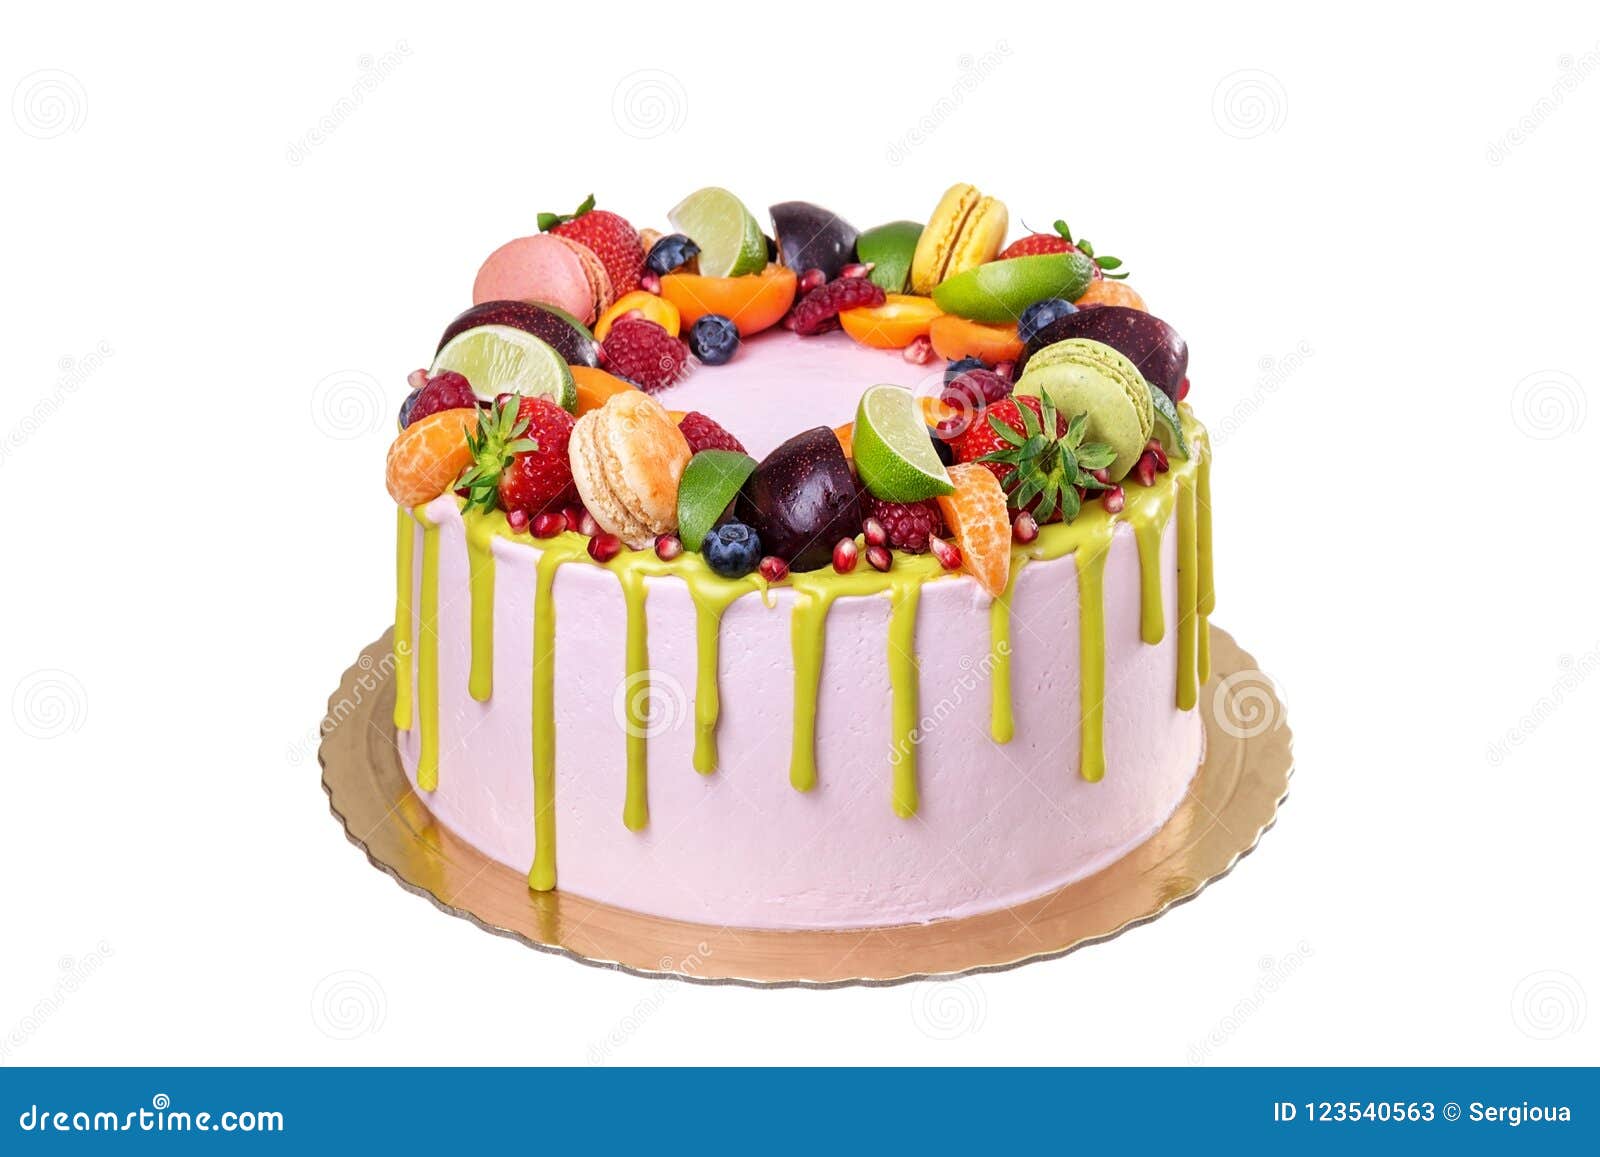 Delicious Birthday Cake or Holiday. on a White Background. Stock Image -  Image of celebration, cream: 123540563